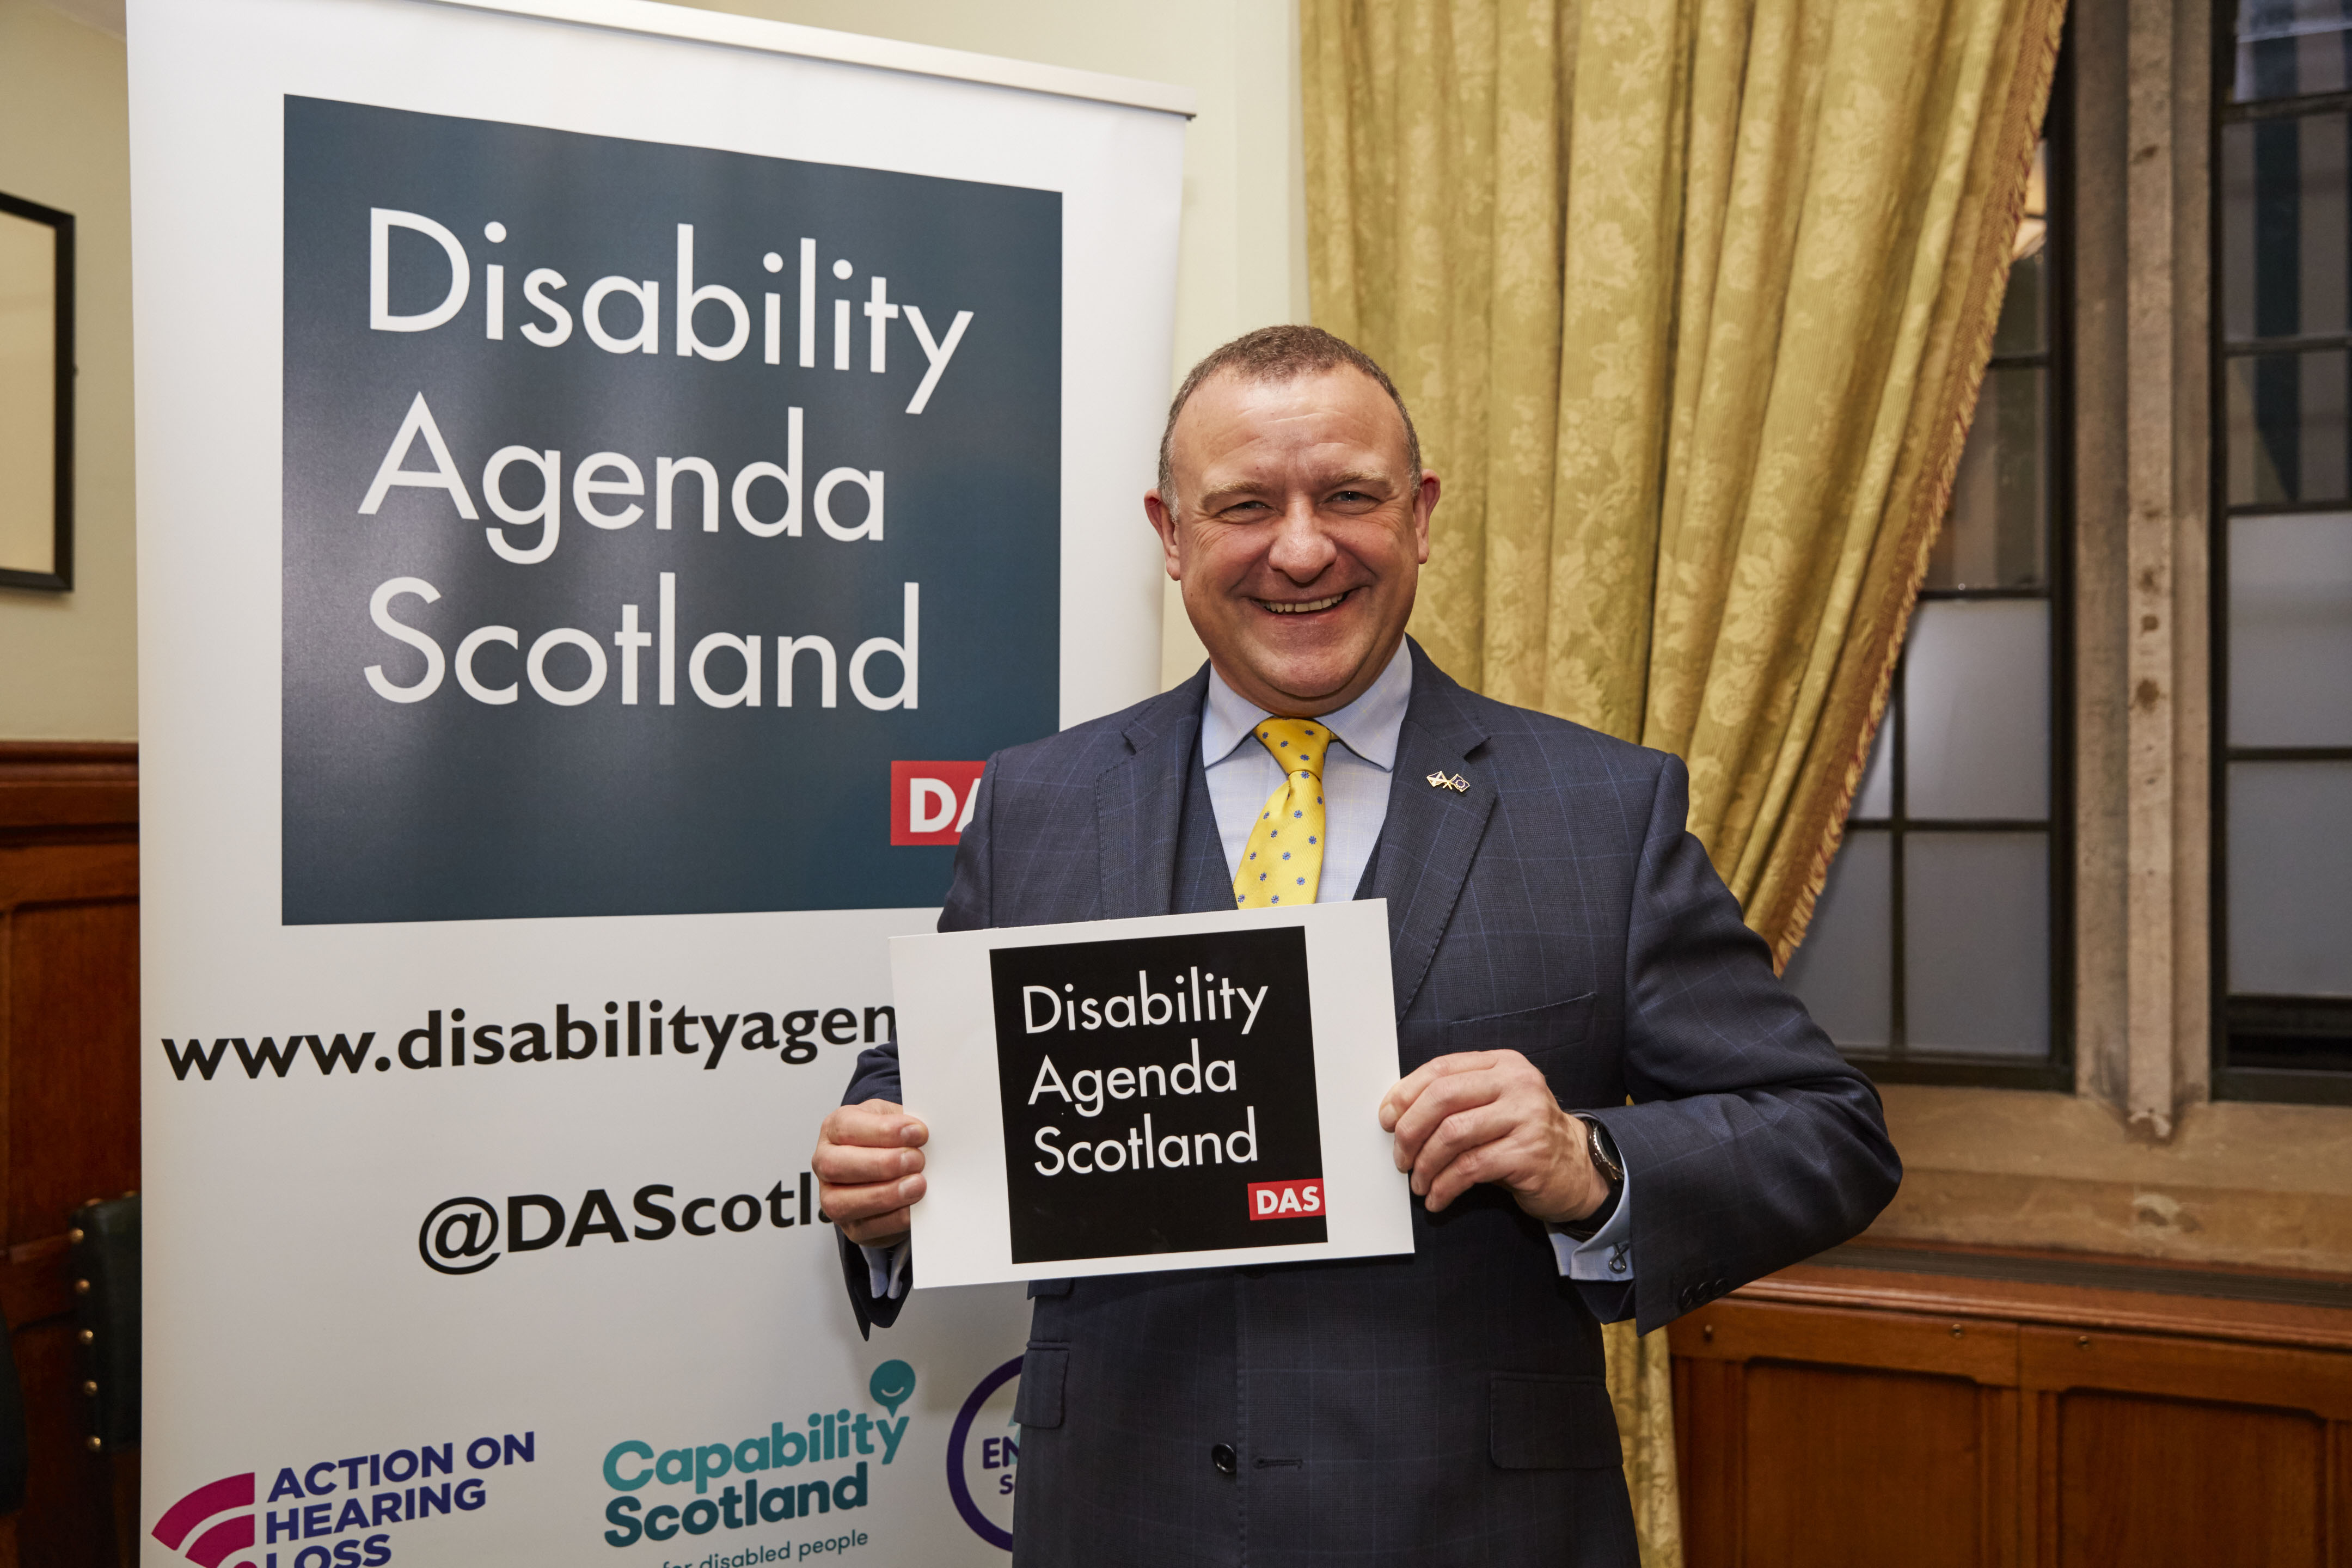 drew-hendry-mp-disability-agenda-scotland